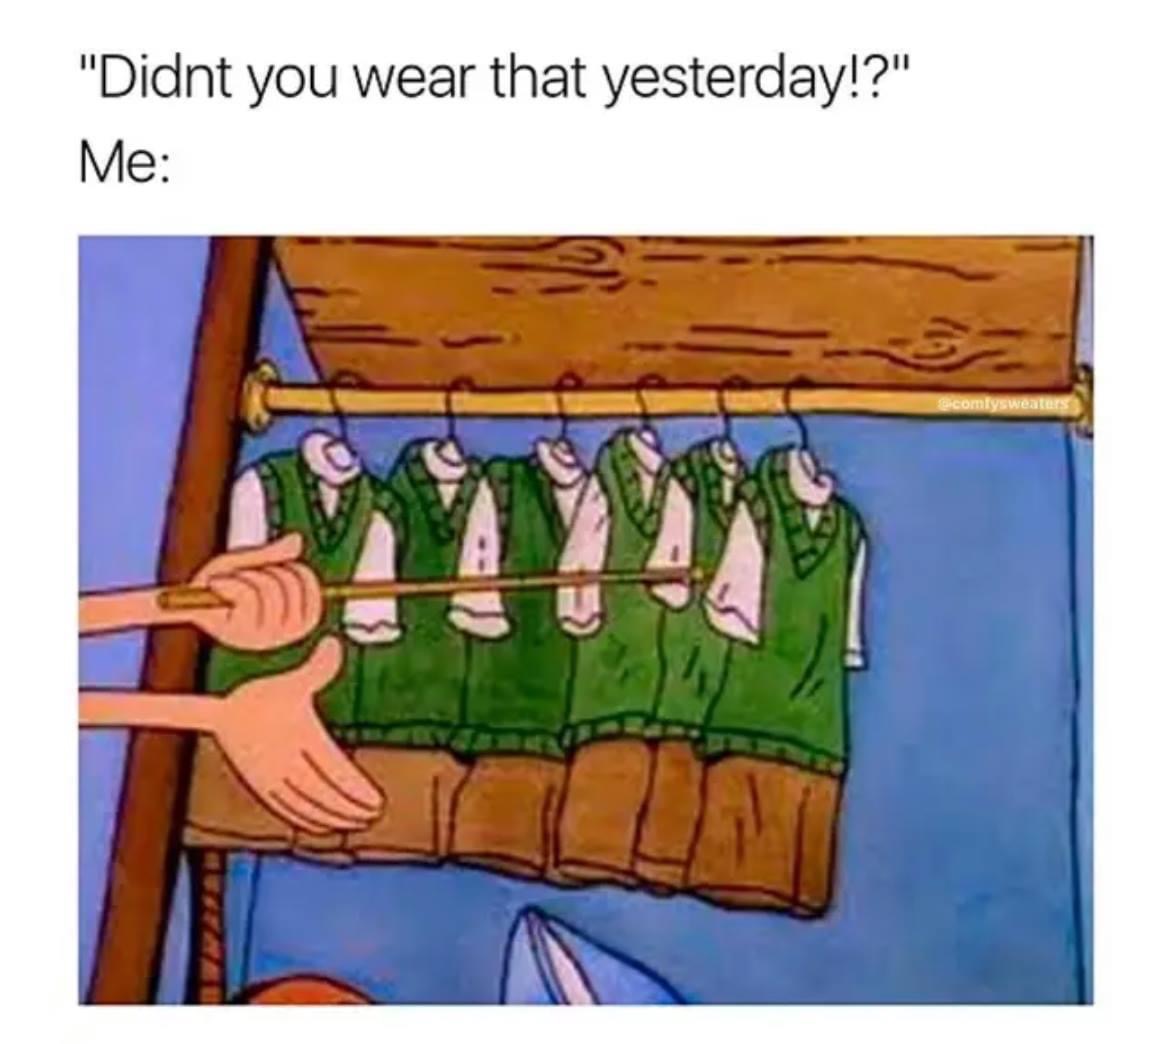 doug closet - "Didnt you wear that yesterday!?" Me acomysweaters Sun